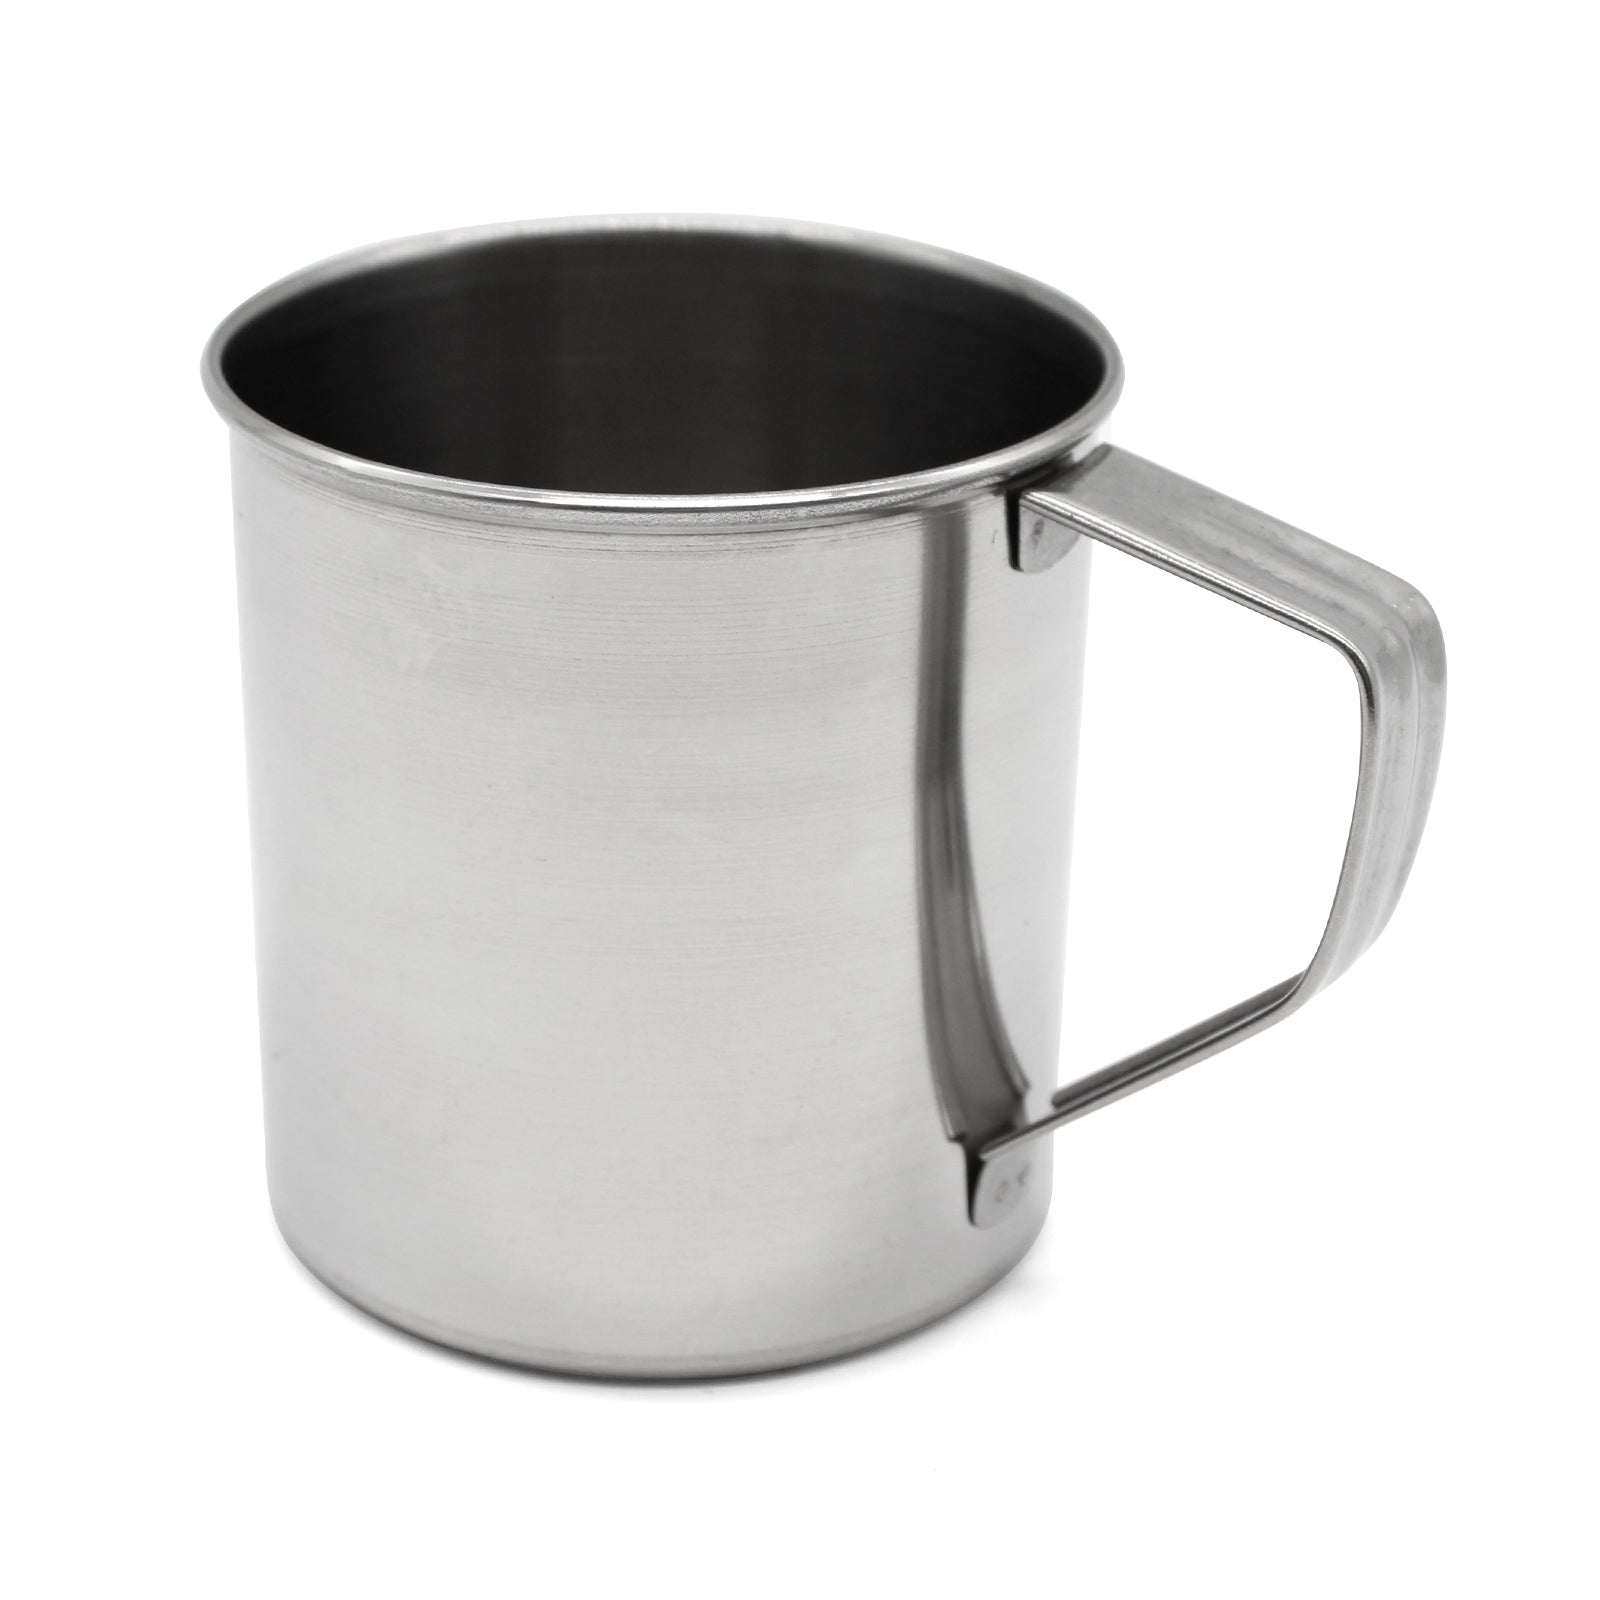 Stainless Steel Mug with Handle